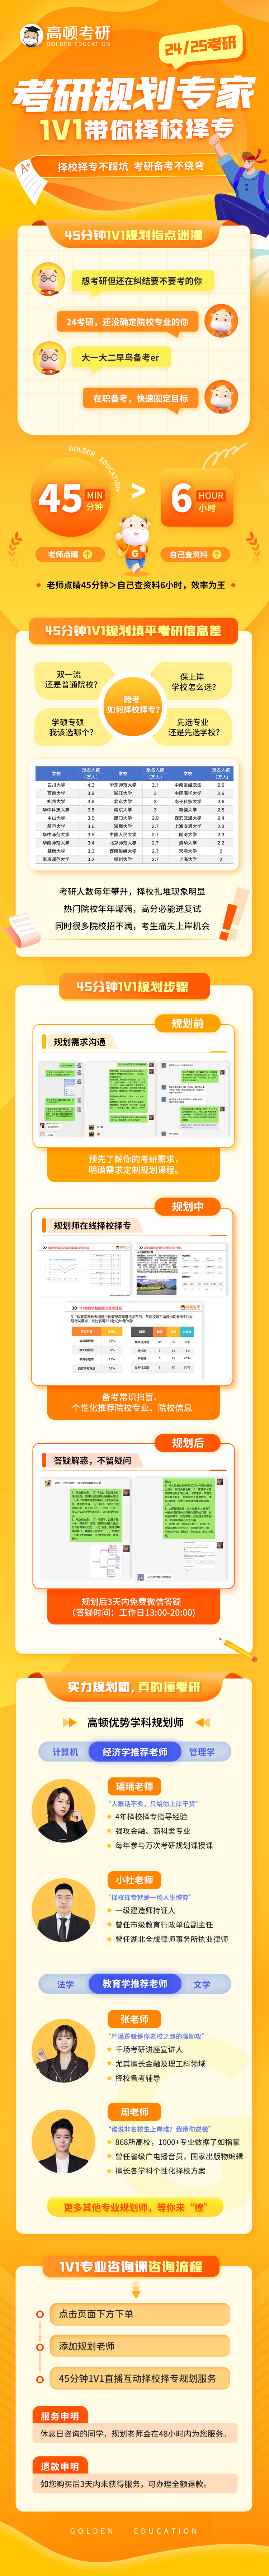 https://simg01.gaodunwangxiao.com/uploadfiles/product-center/202303/06/116f7_20230306112746.jpg